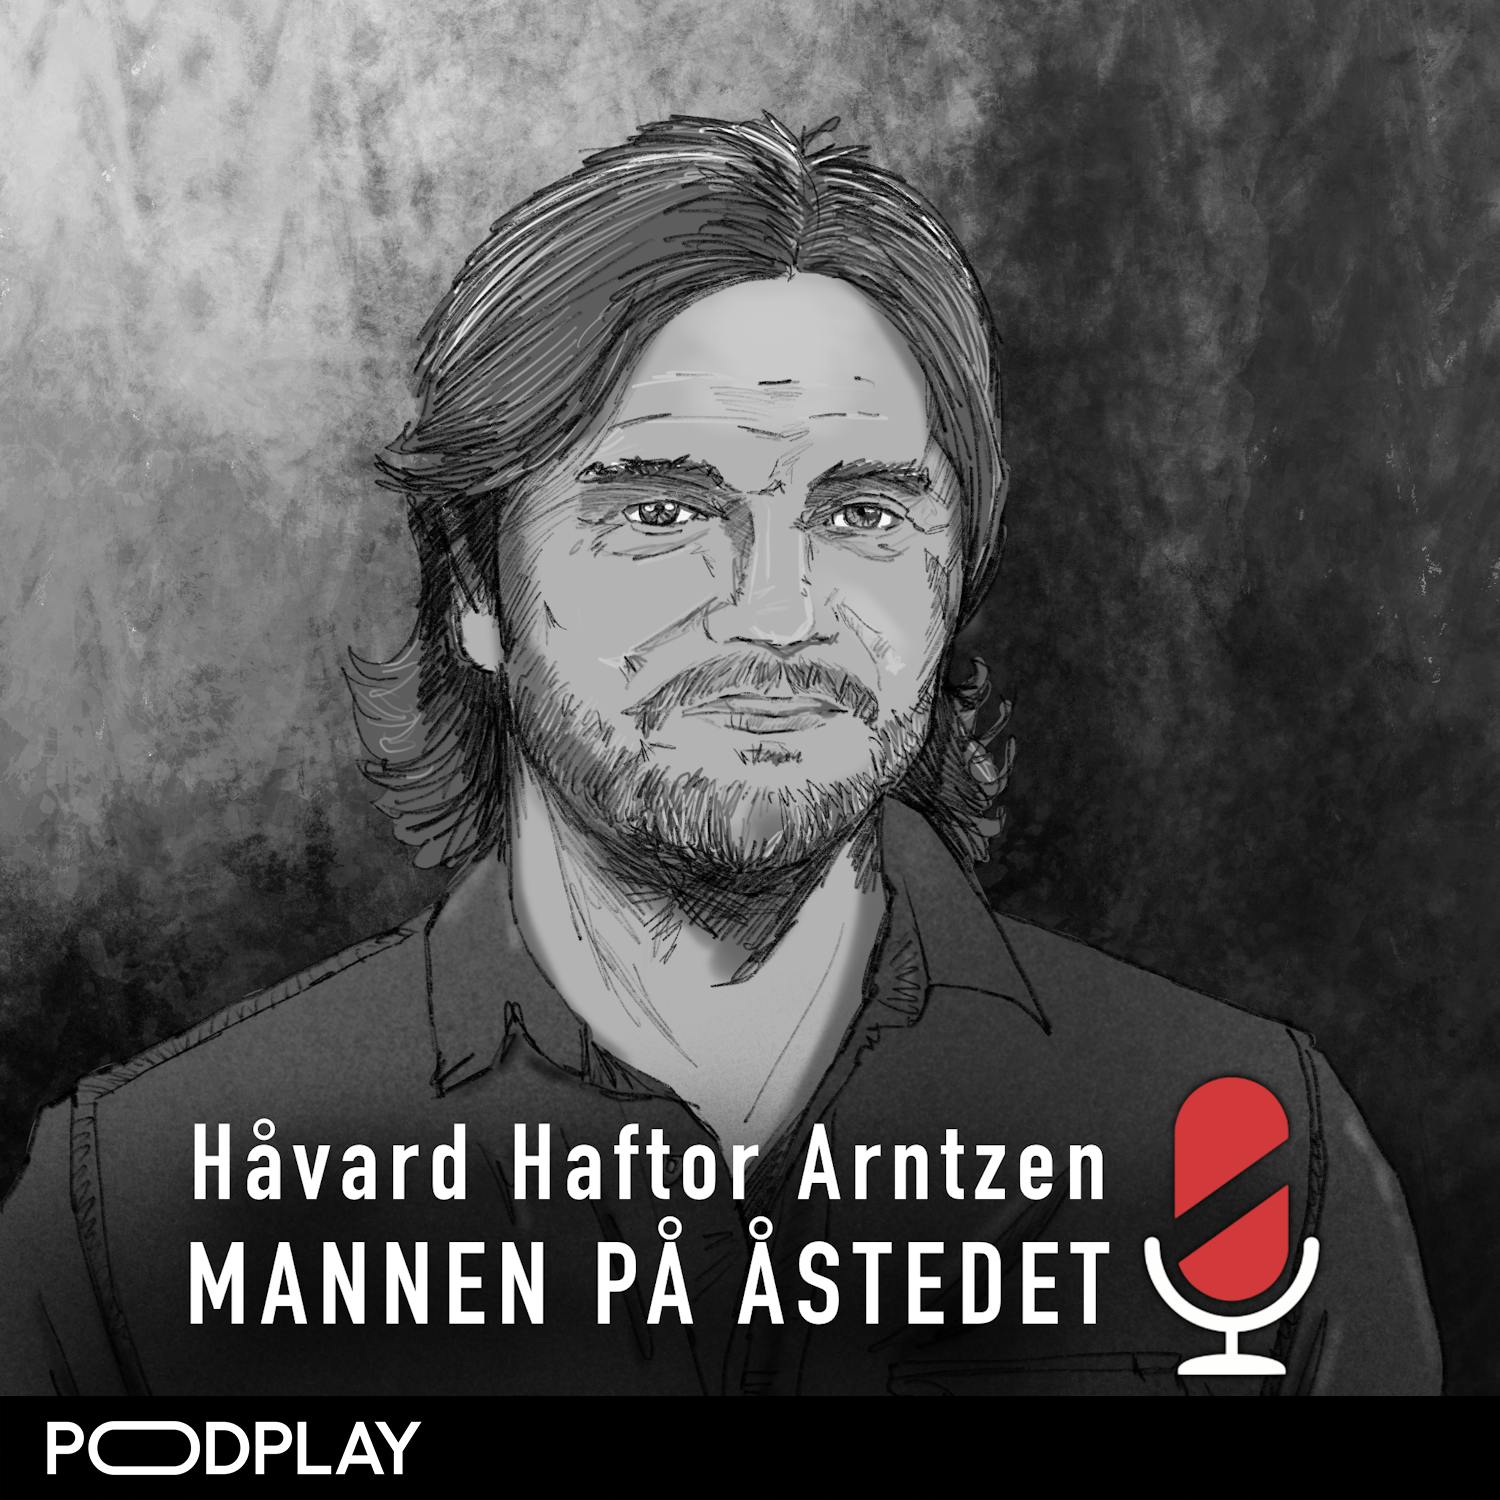 Håvard Haftor Arntzen: Mannen på åstedet